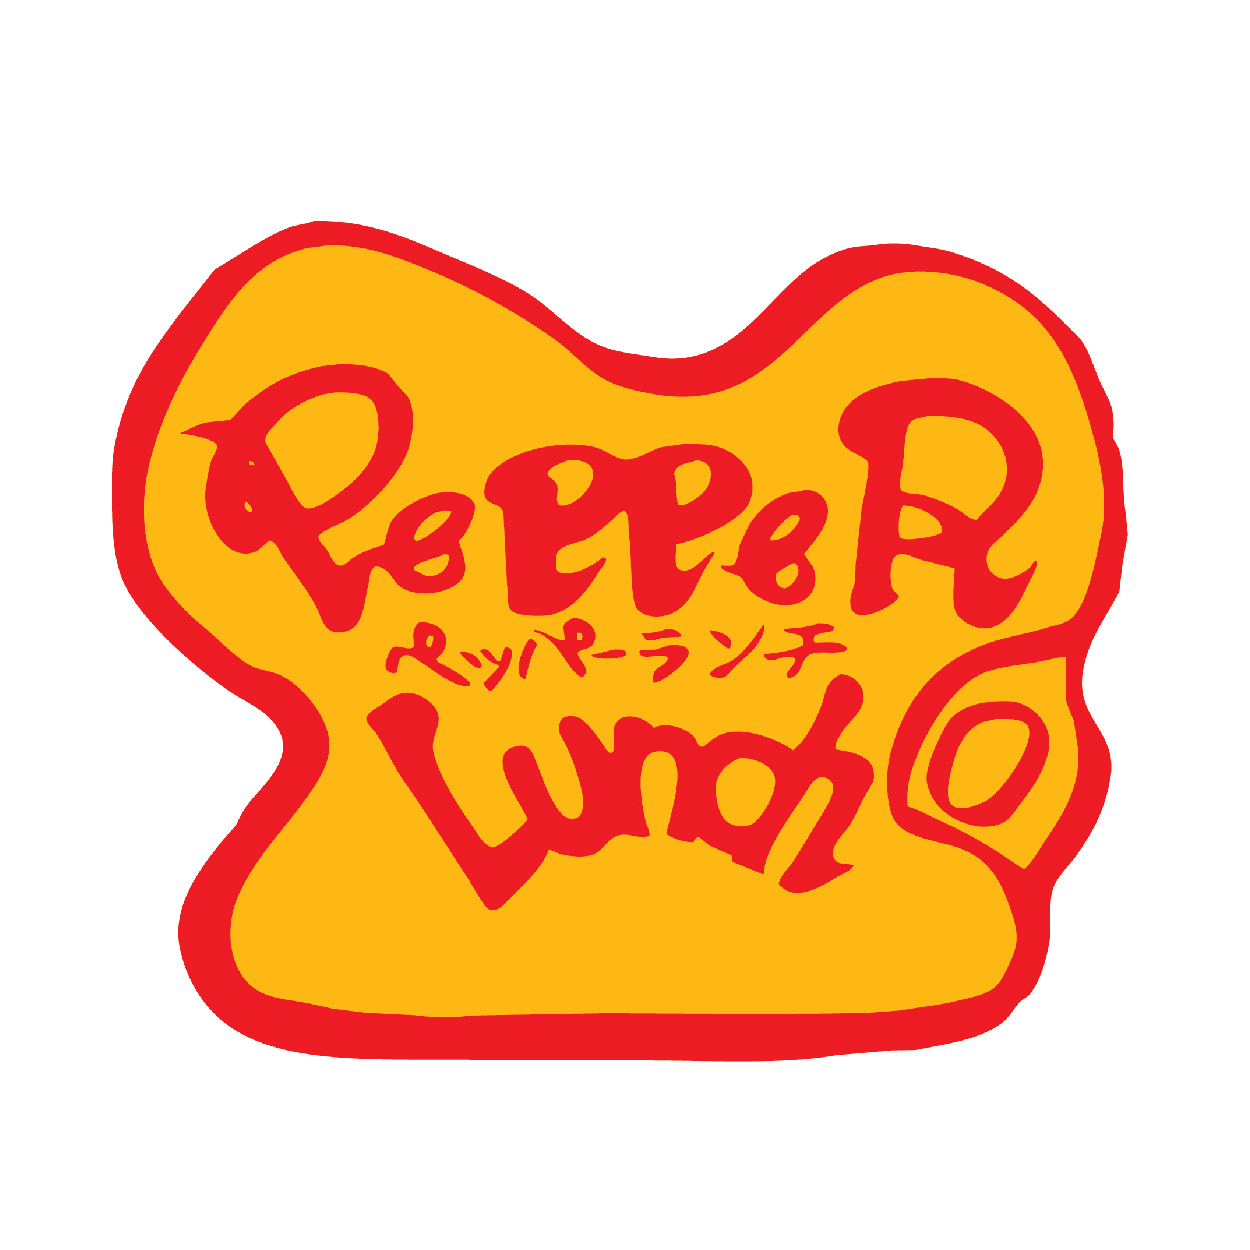 胡椒廚房 Pepper Lunch